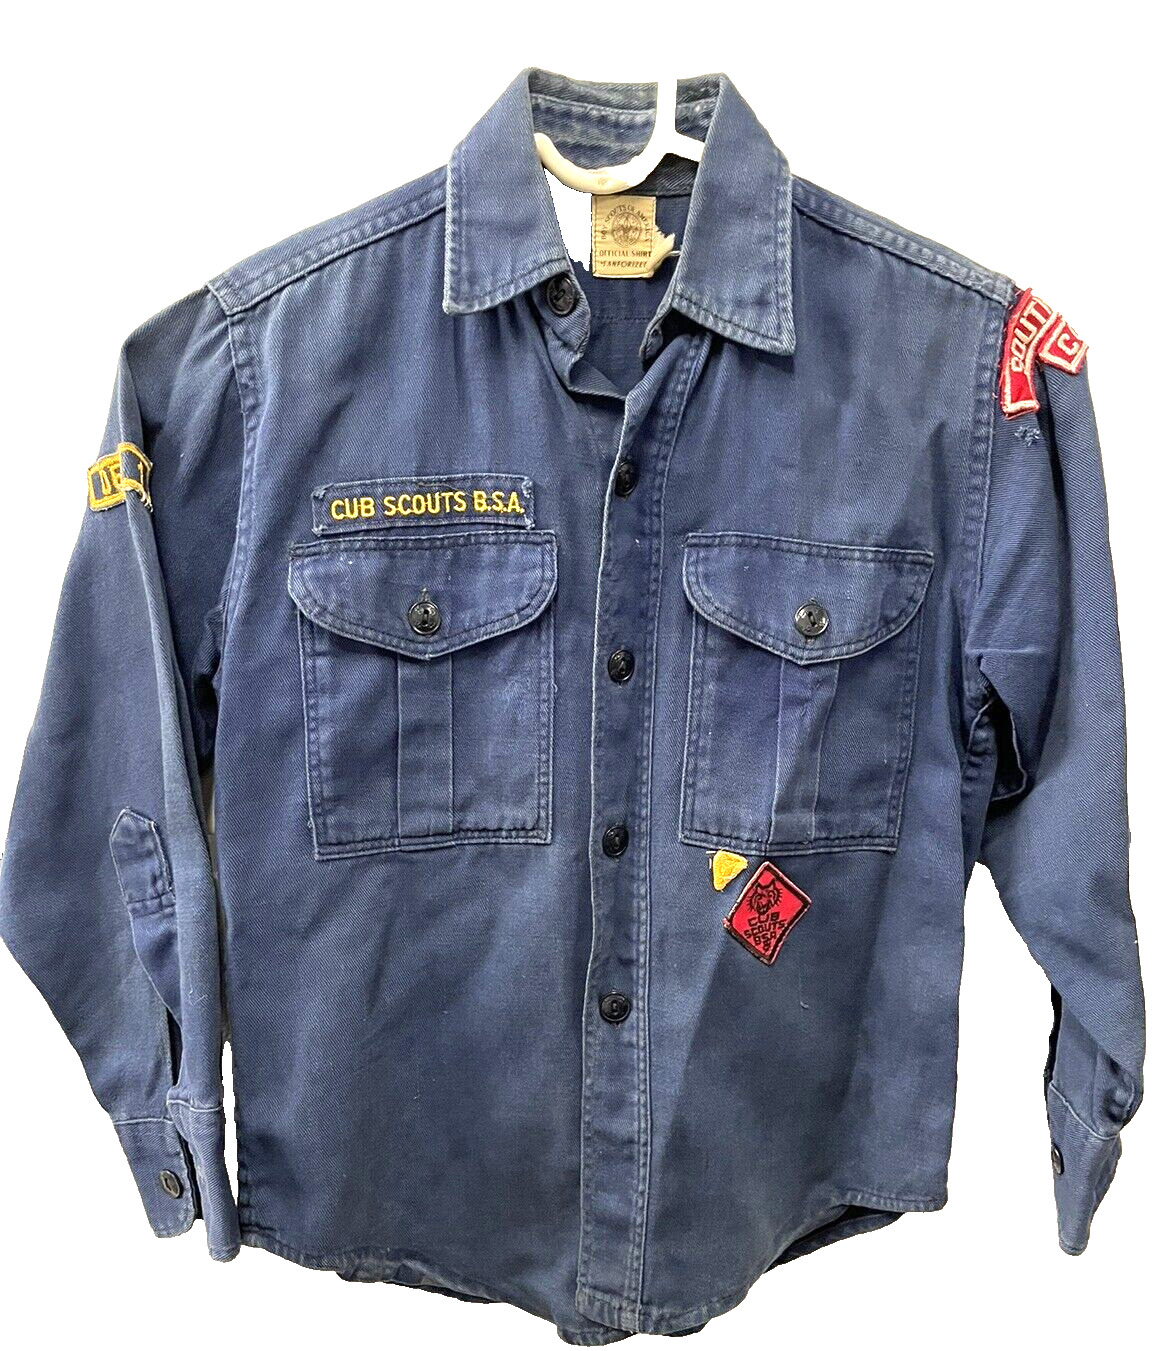 BSA Vintage Cub Scout Uniform Shirt with Patches Southing Conn. 34